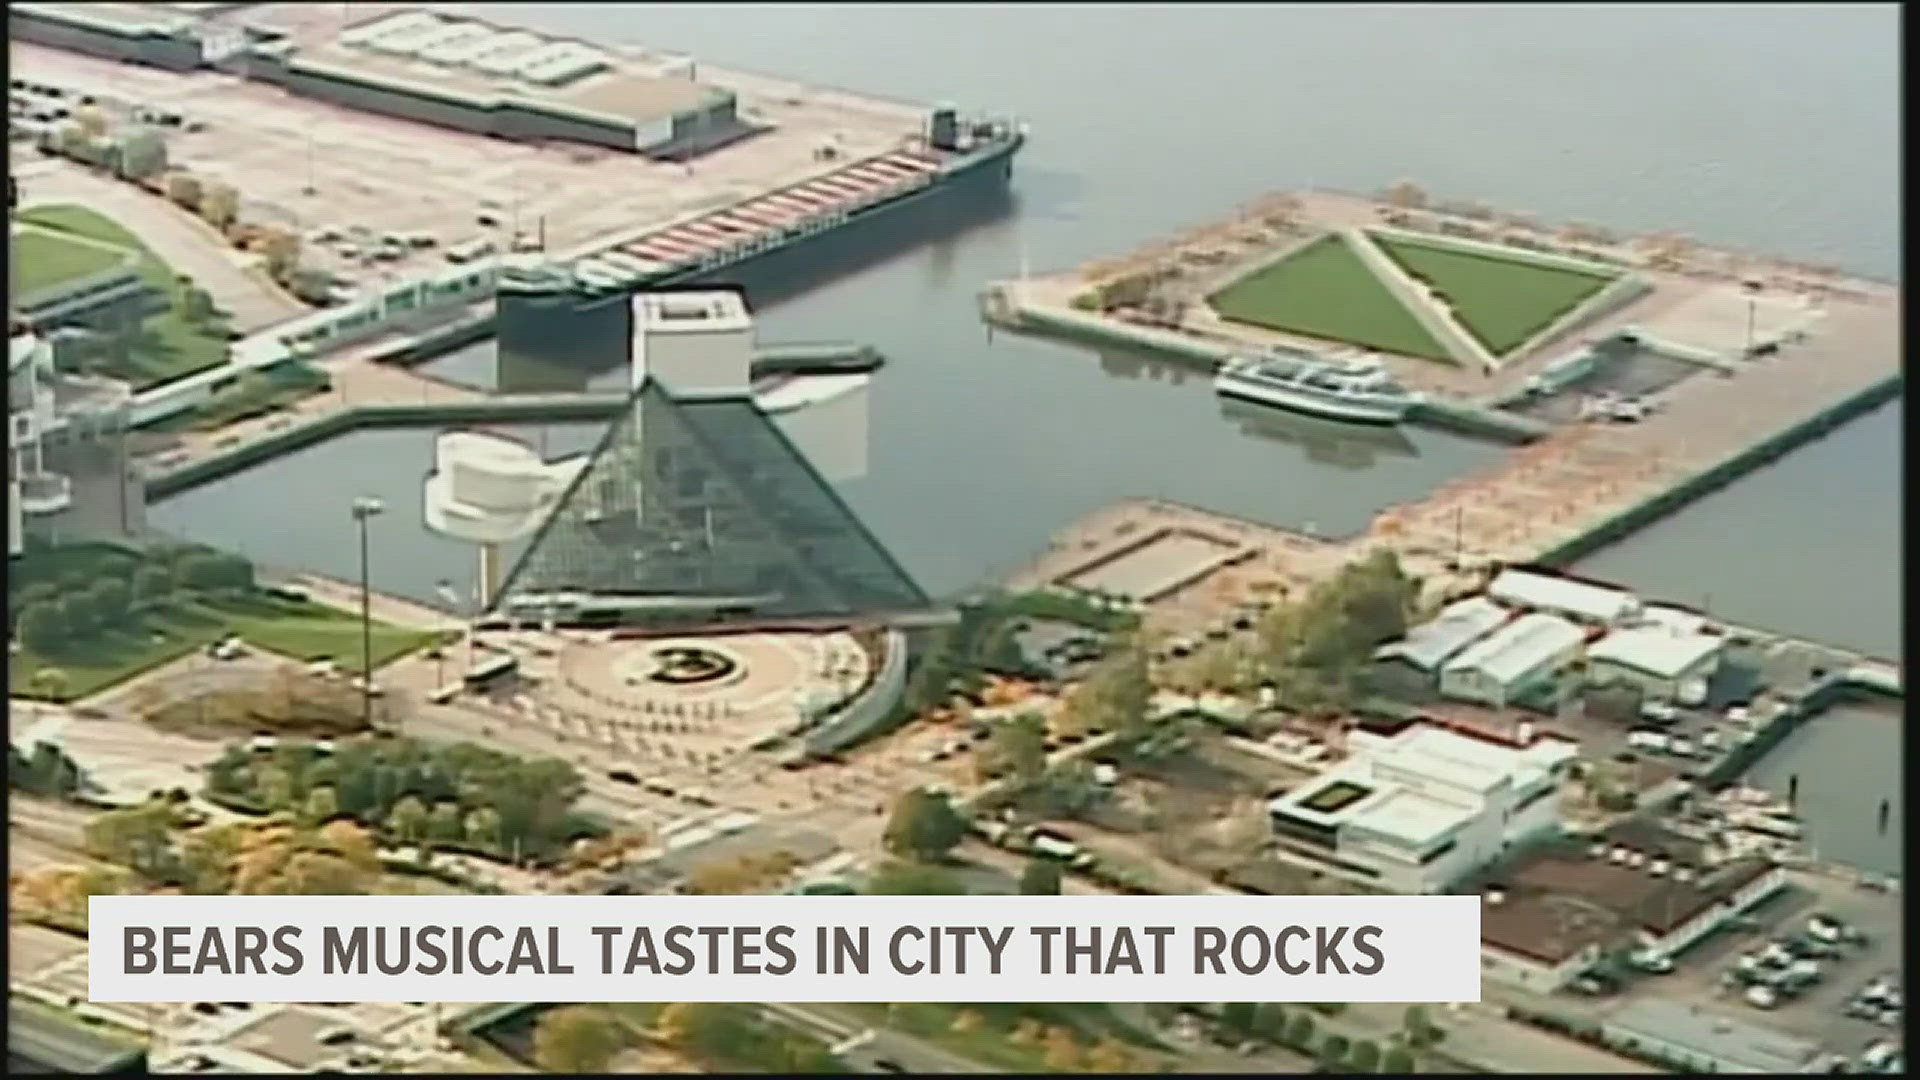 Hershey Bears reveal musical tastes in city of Rock & Roll